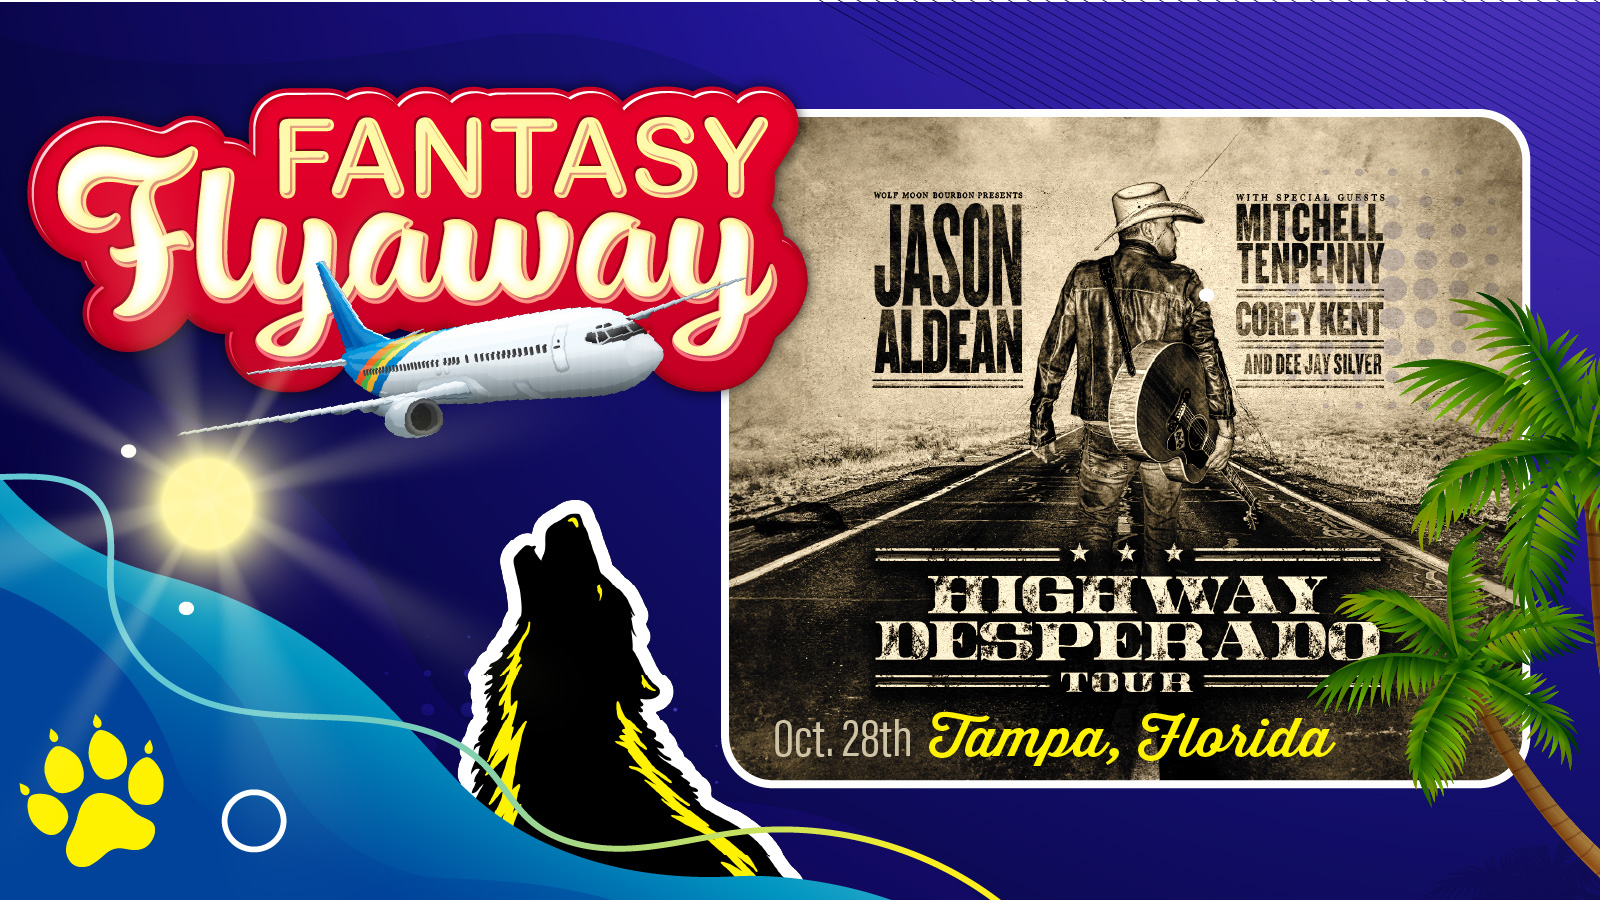 Fantasy Flyaway…Jason Aldean In Tampa October 28